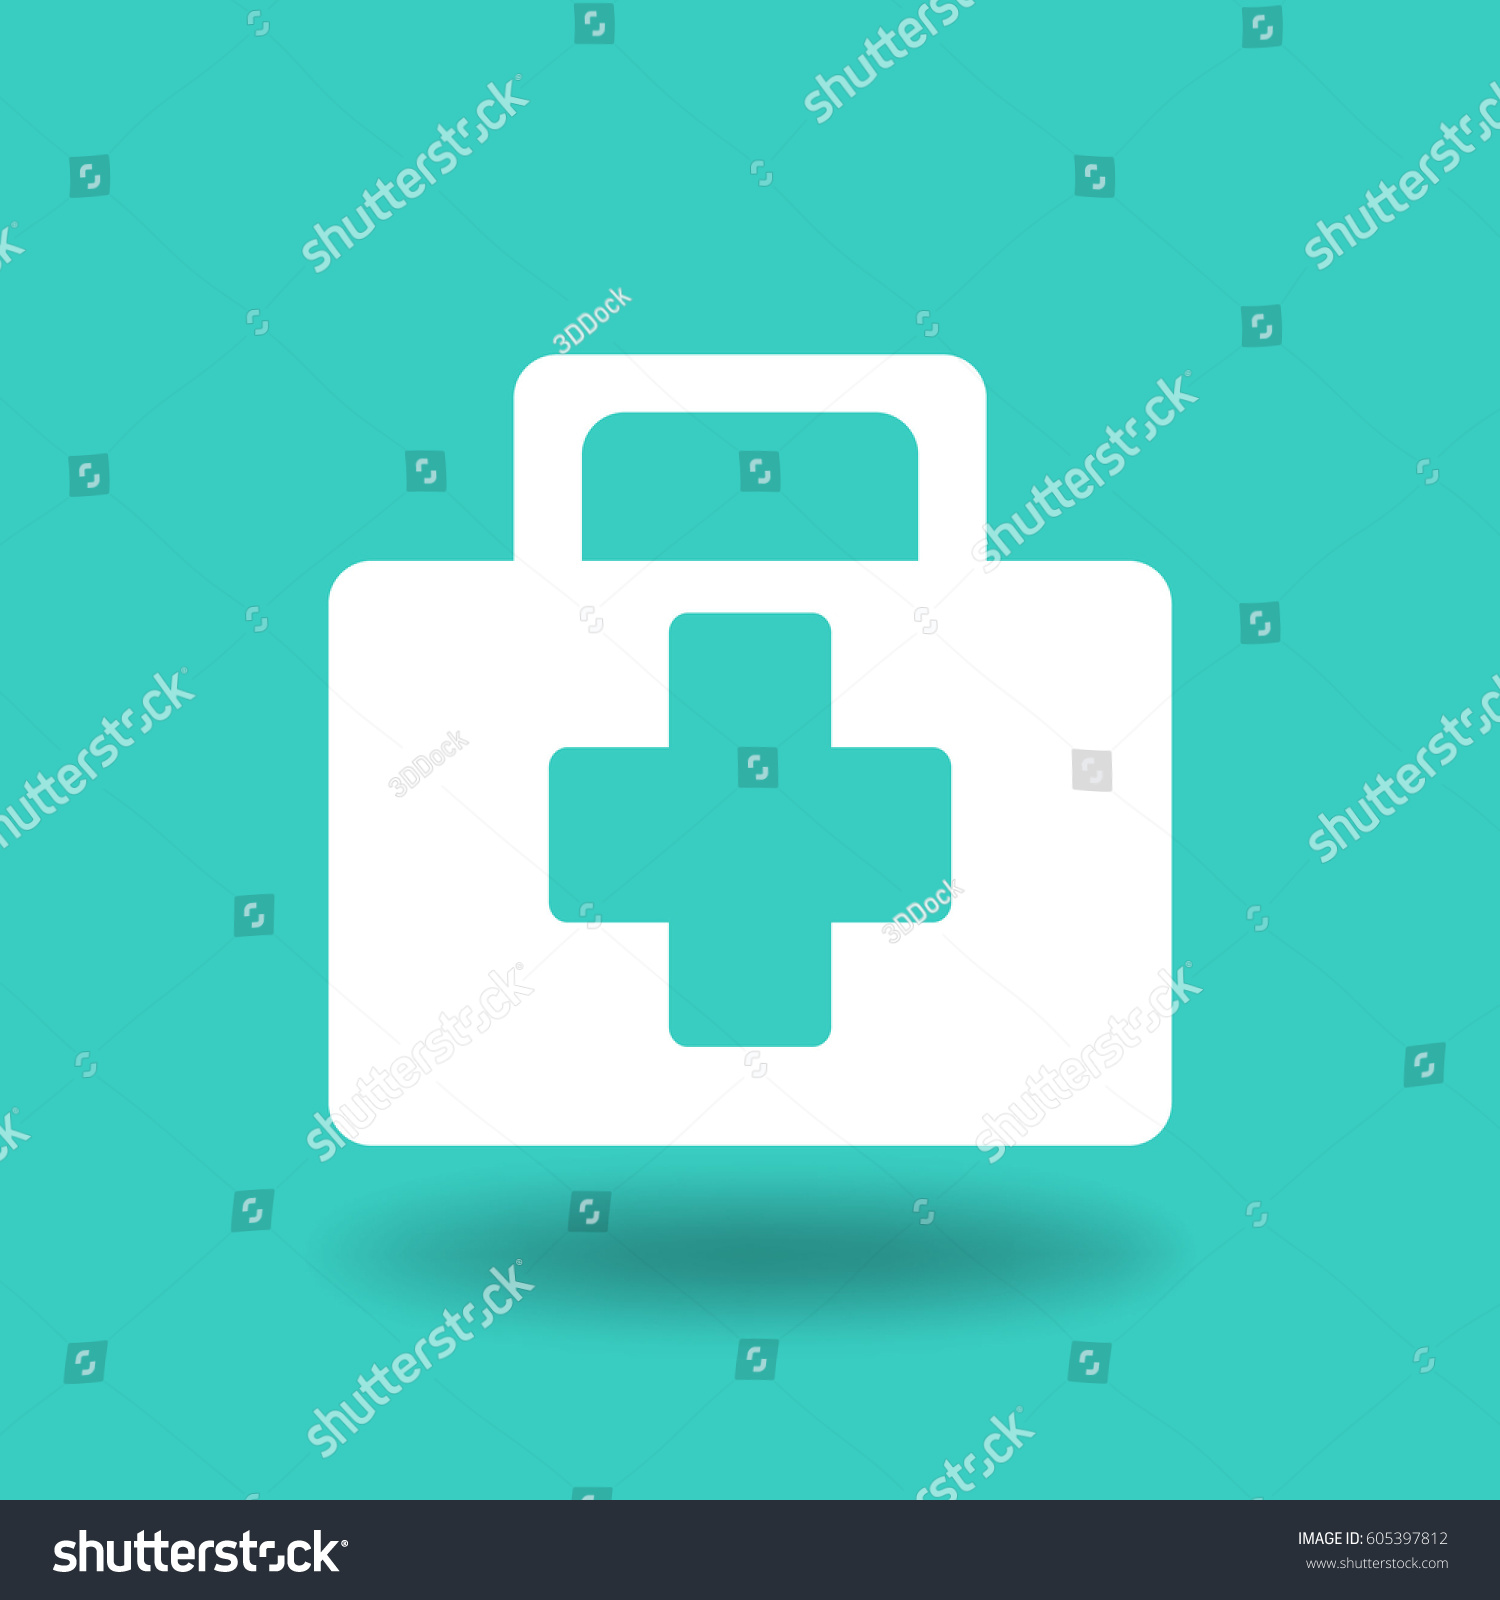 Download Edit Vectors Free Online - Medical box. | Shutterstock Editor